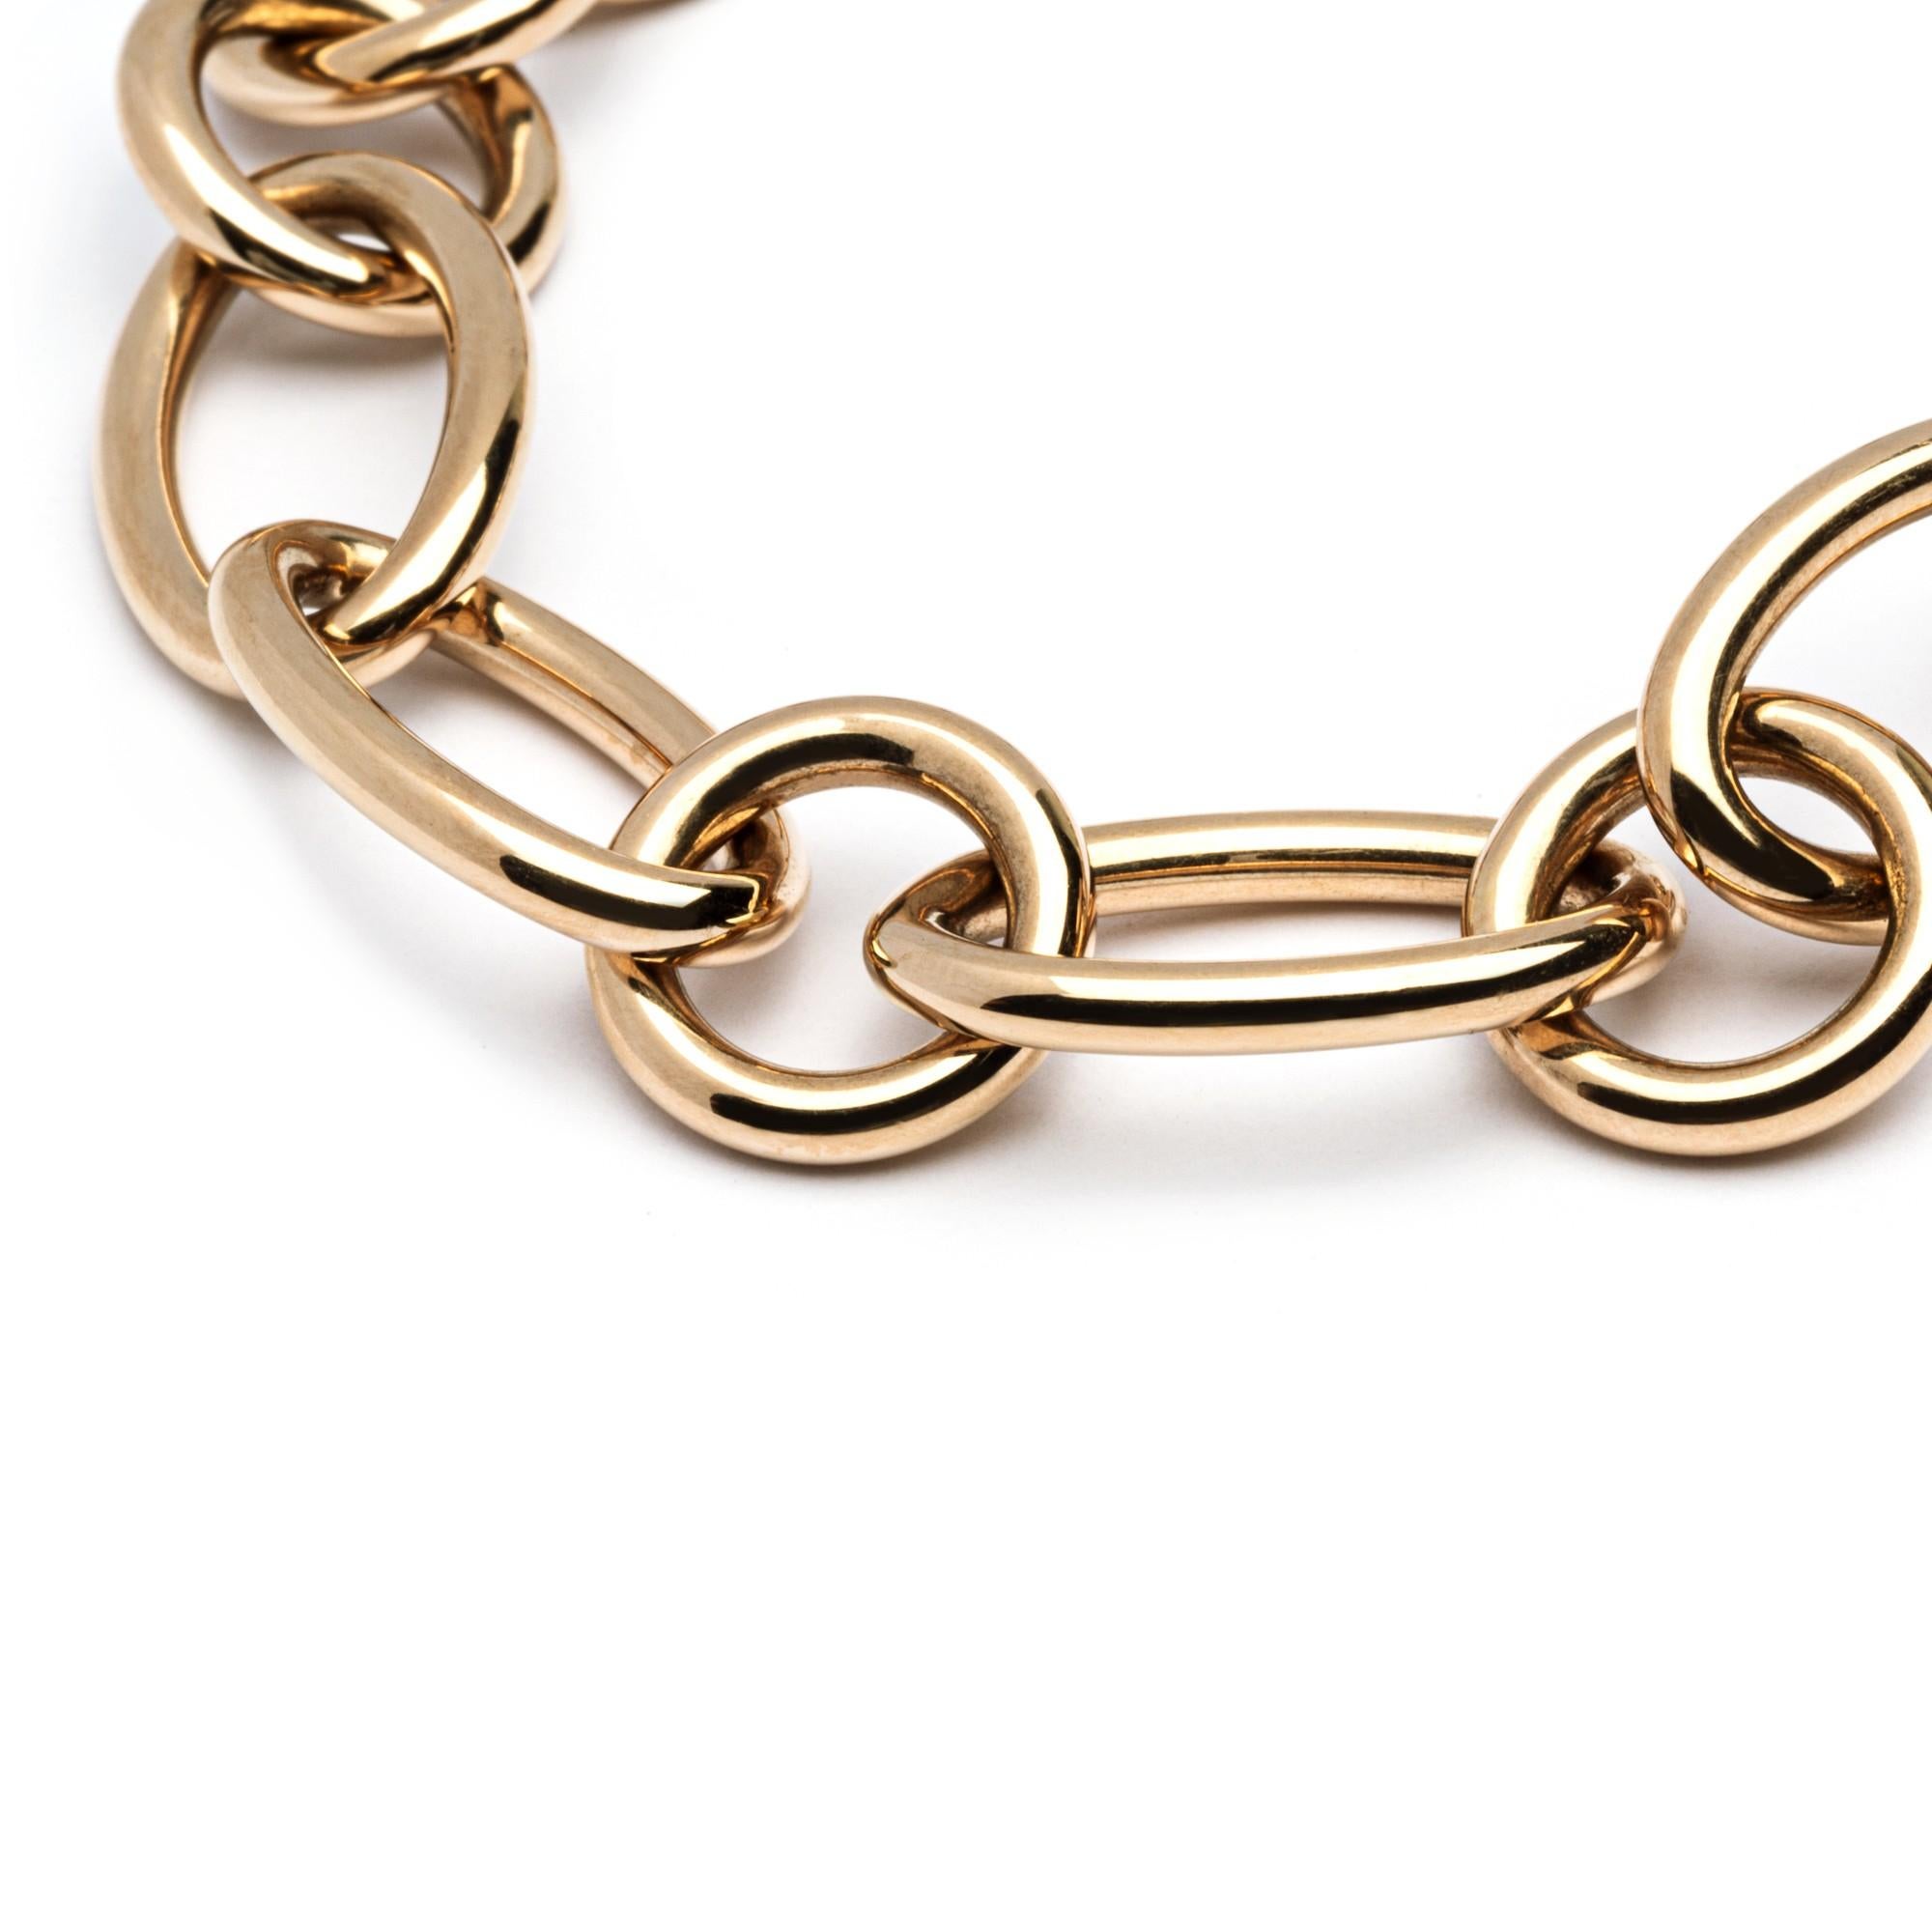 Contemporary Alex Jona 18 Karat Yellow Gold Link Chain Bracelet For Sale